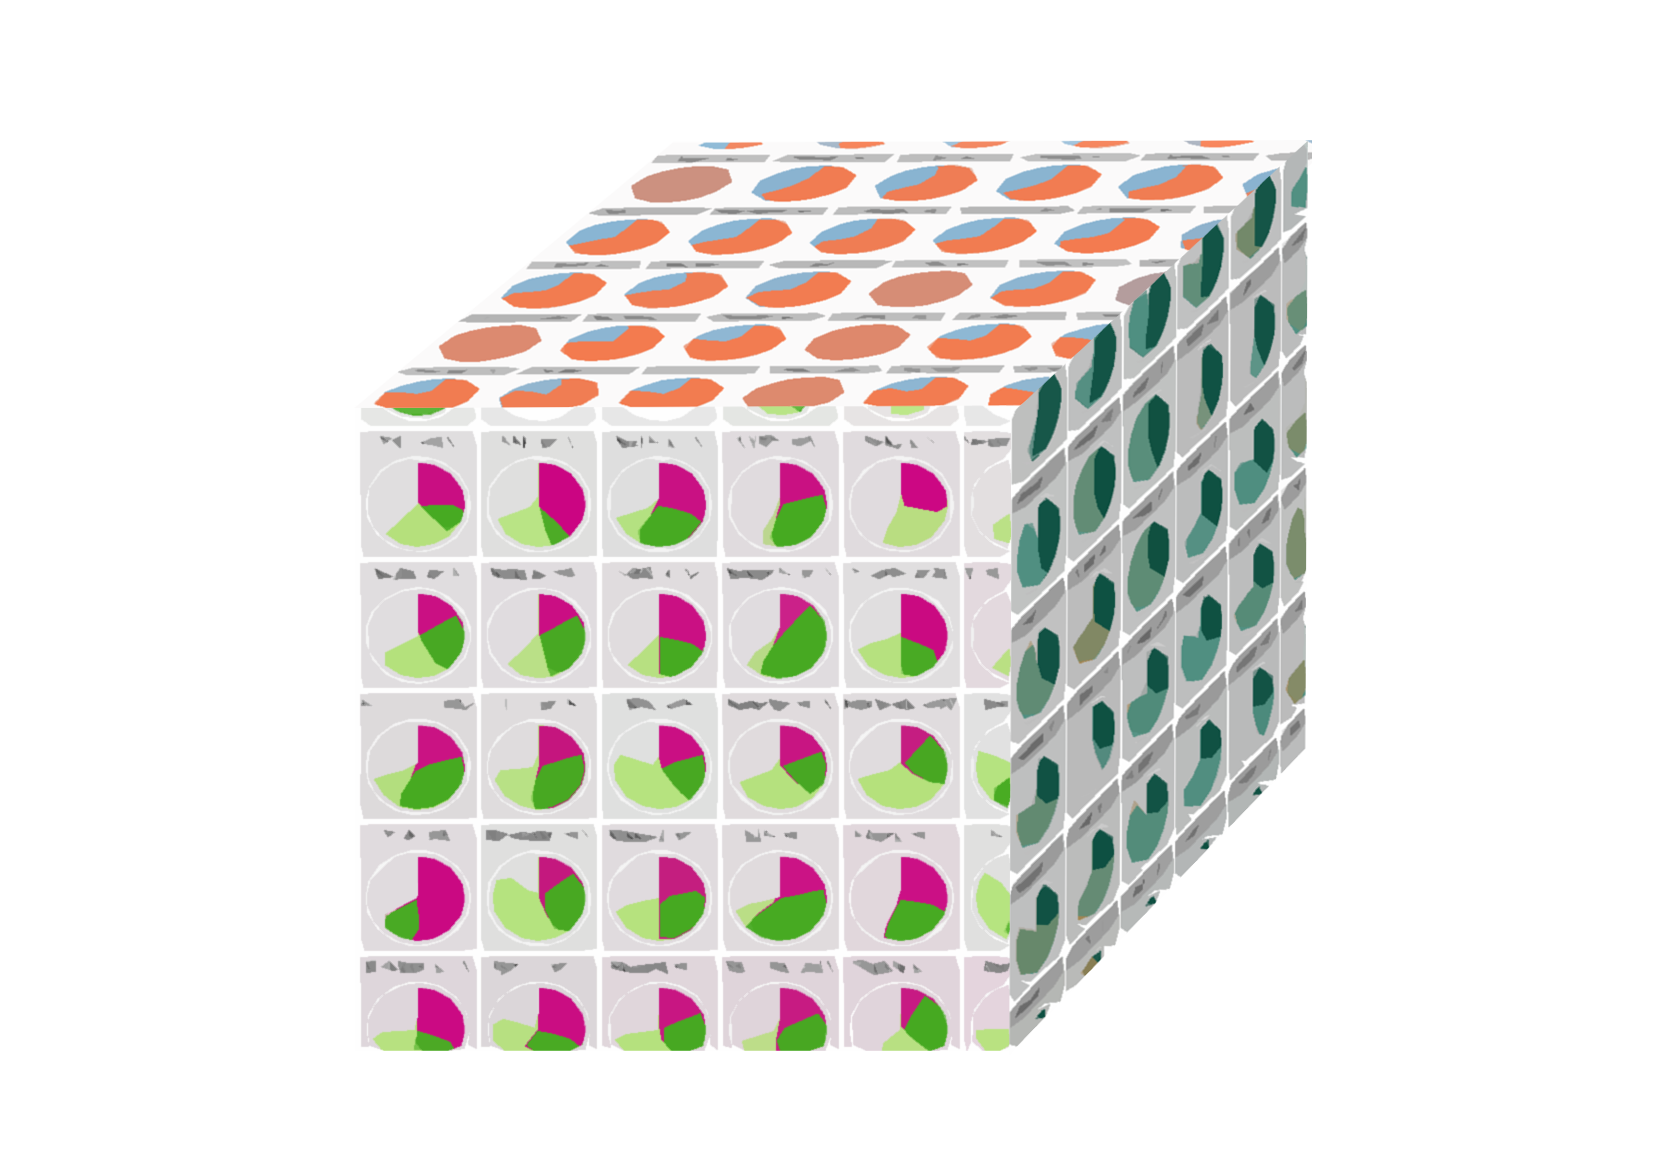 APDA data cube